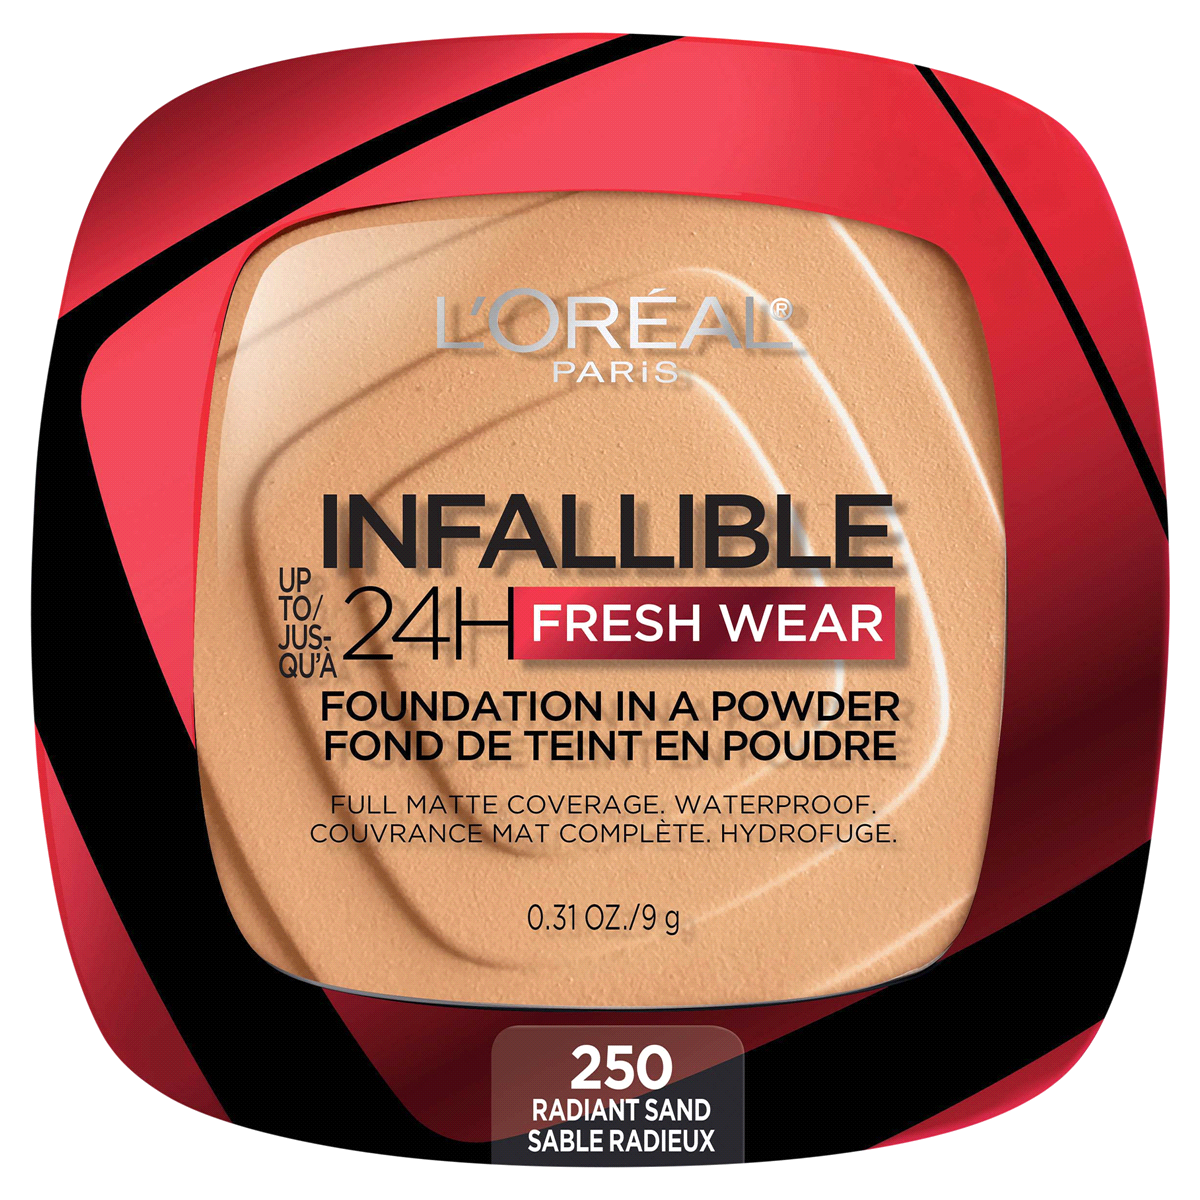 slide 1 of 2, L'Oréal L'Oreal Up to 24H Fresh Wear Foundation-in-a-Powder - Radiant Sand (250), 0.31 oz